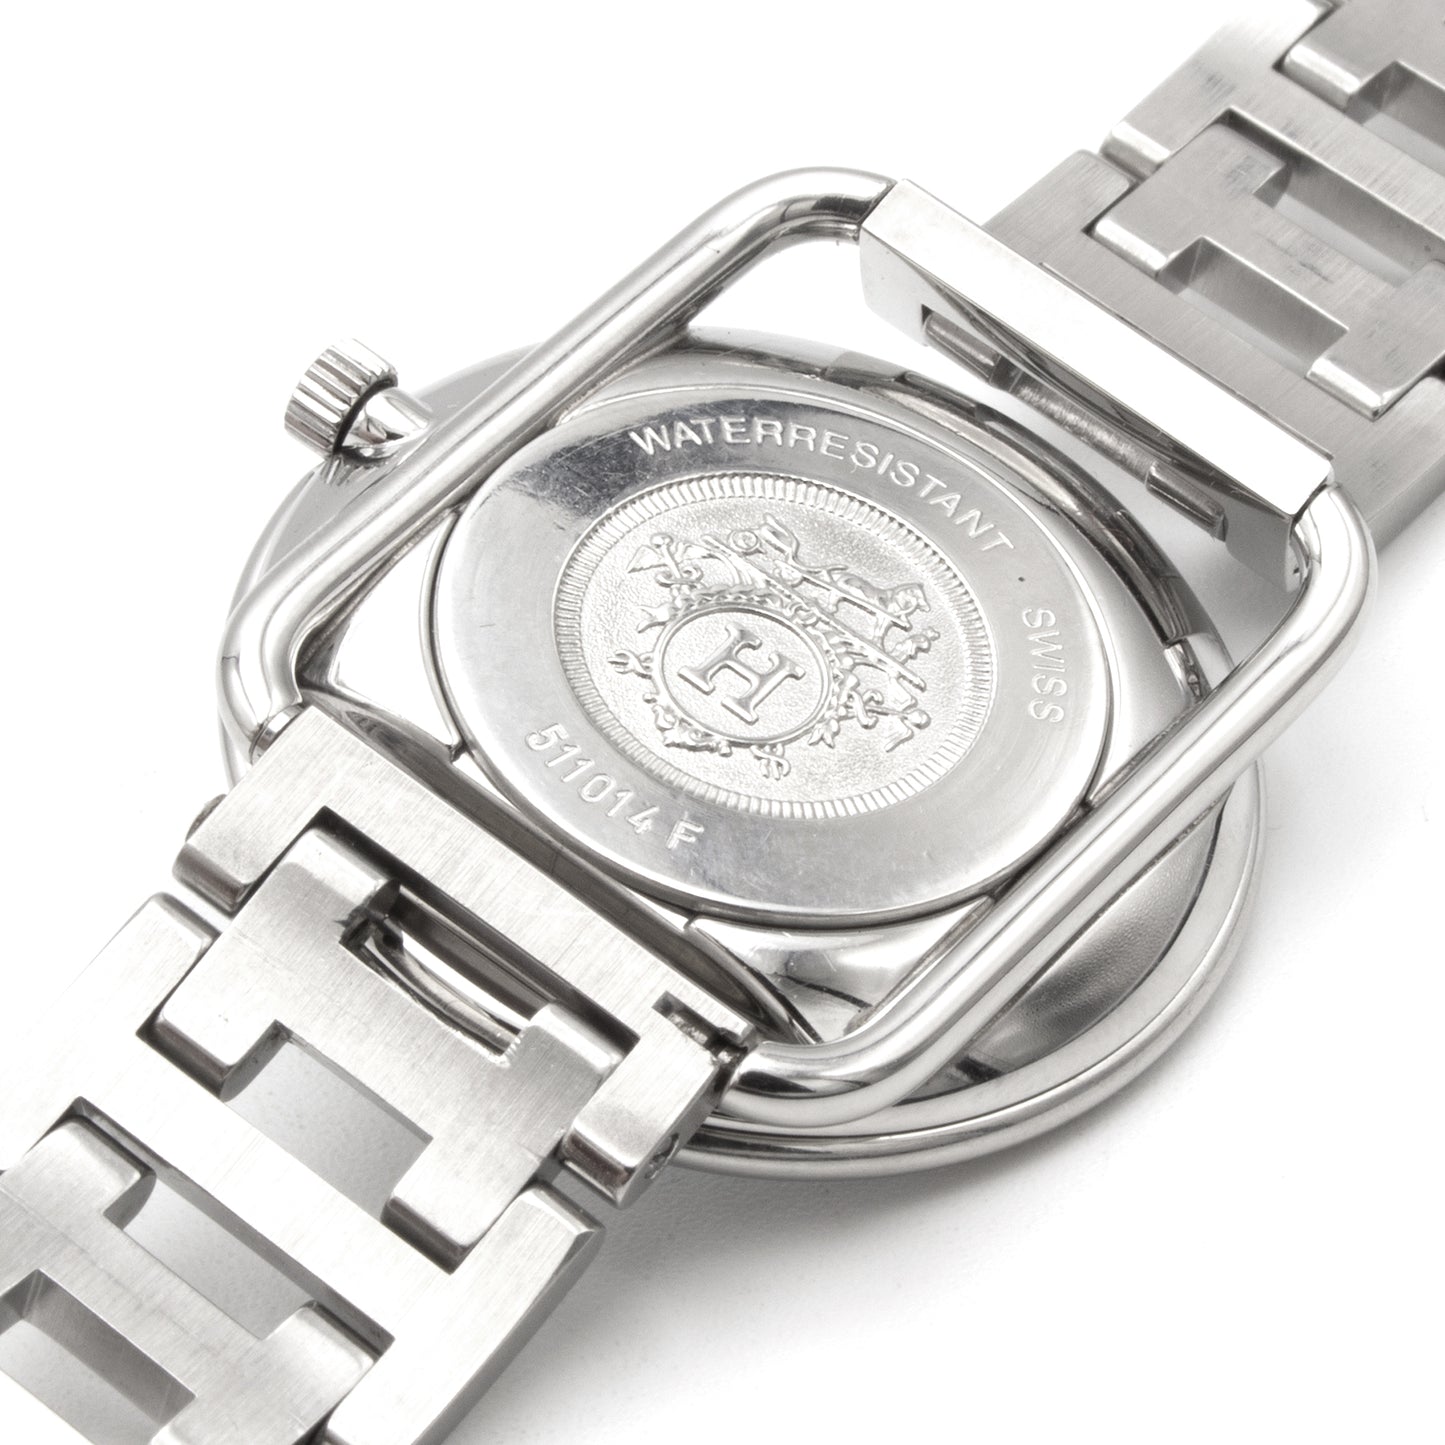 Hermès Arceau 33mm watch